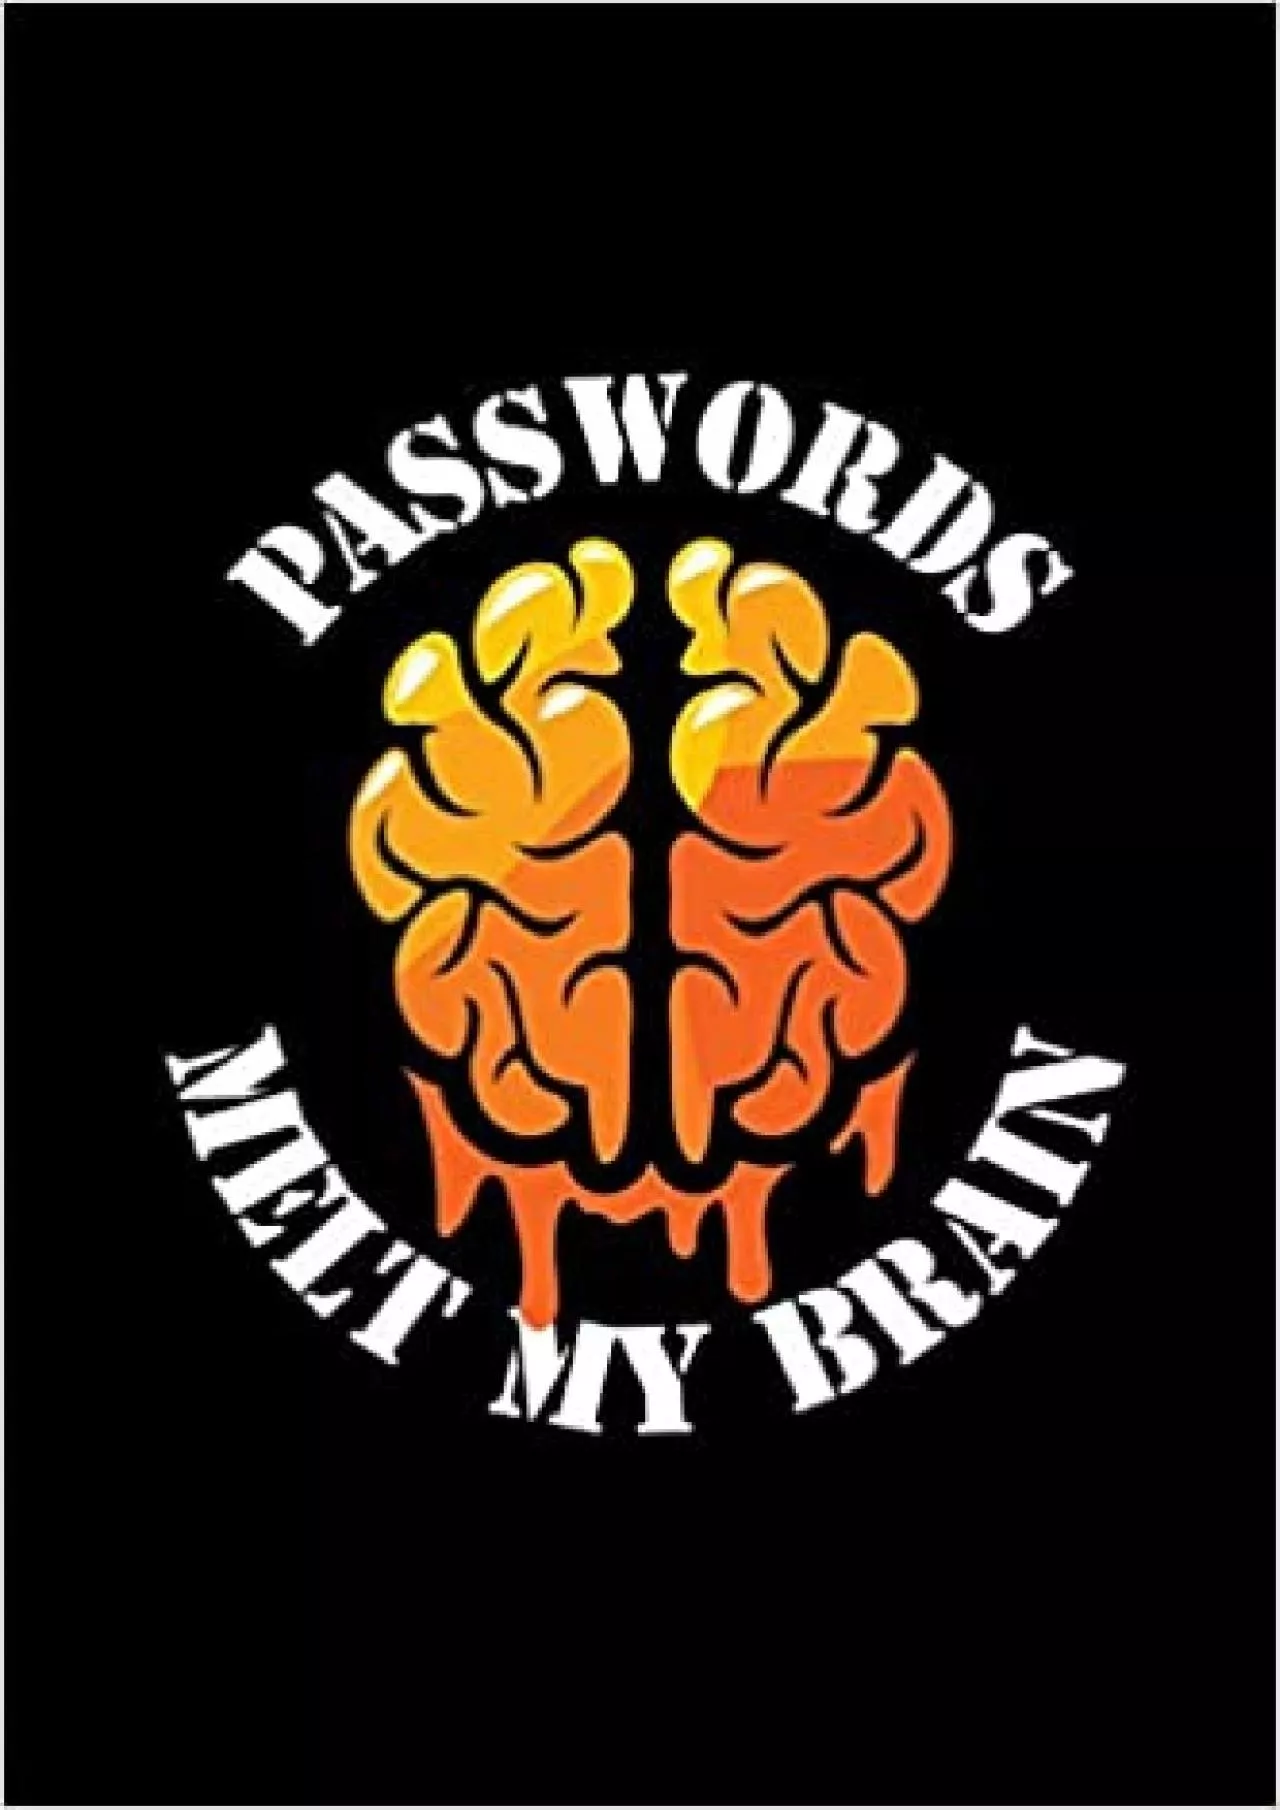 (BOOS)-Passwords Melt My Brain Password Journal Internet Address and Password Logbook